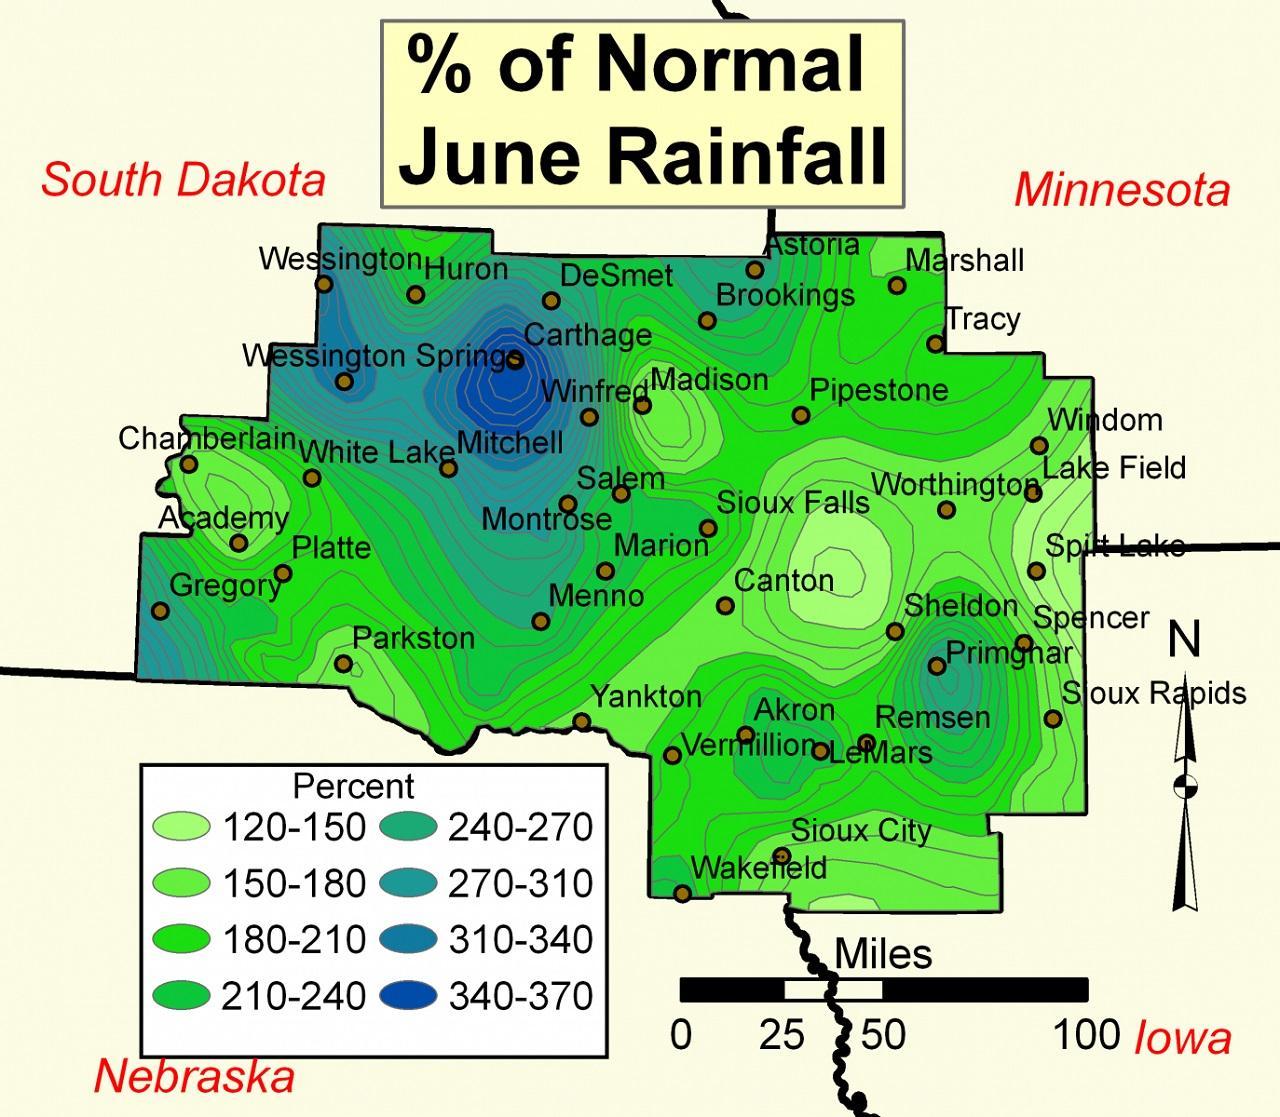 Percent of Normal June Rainfall